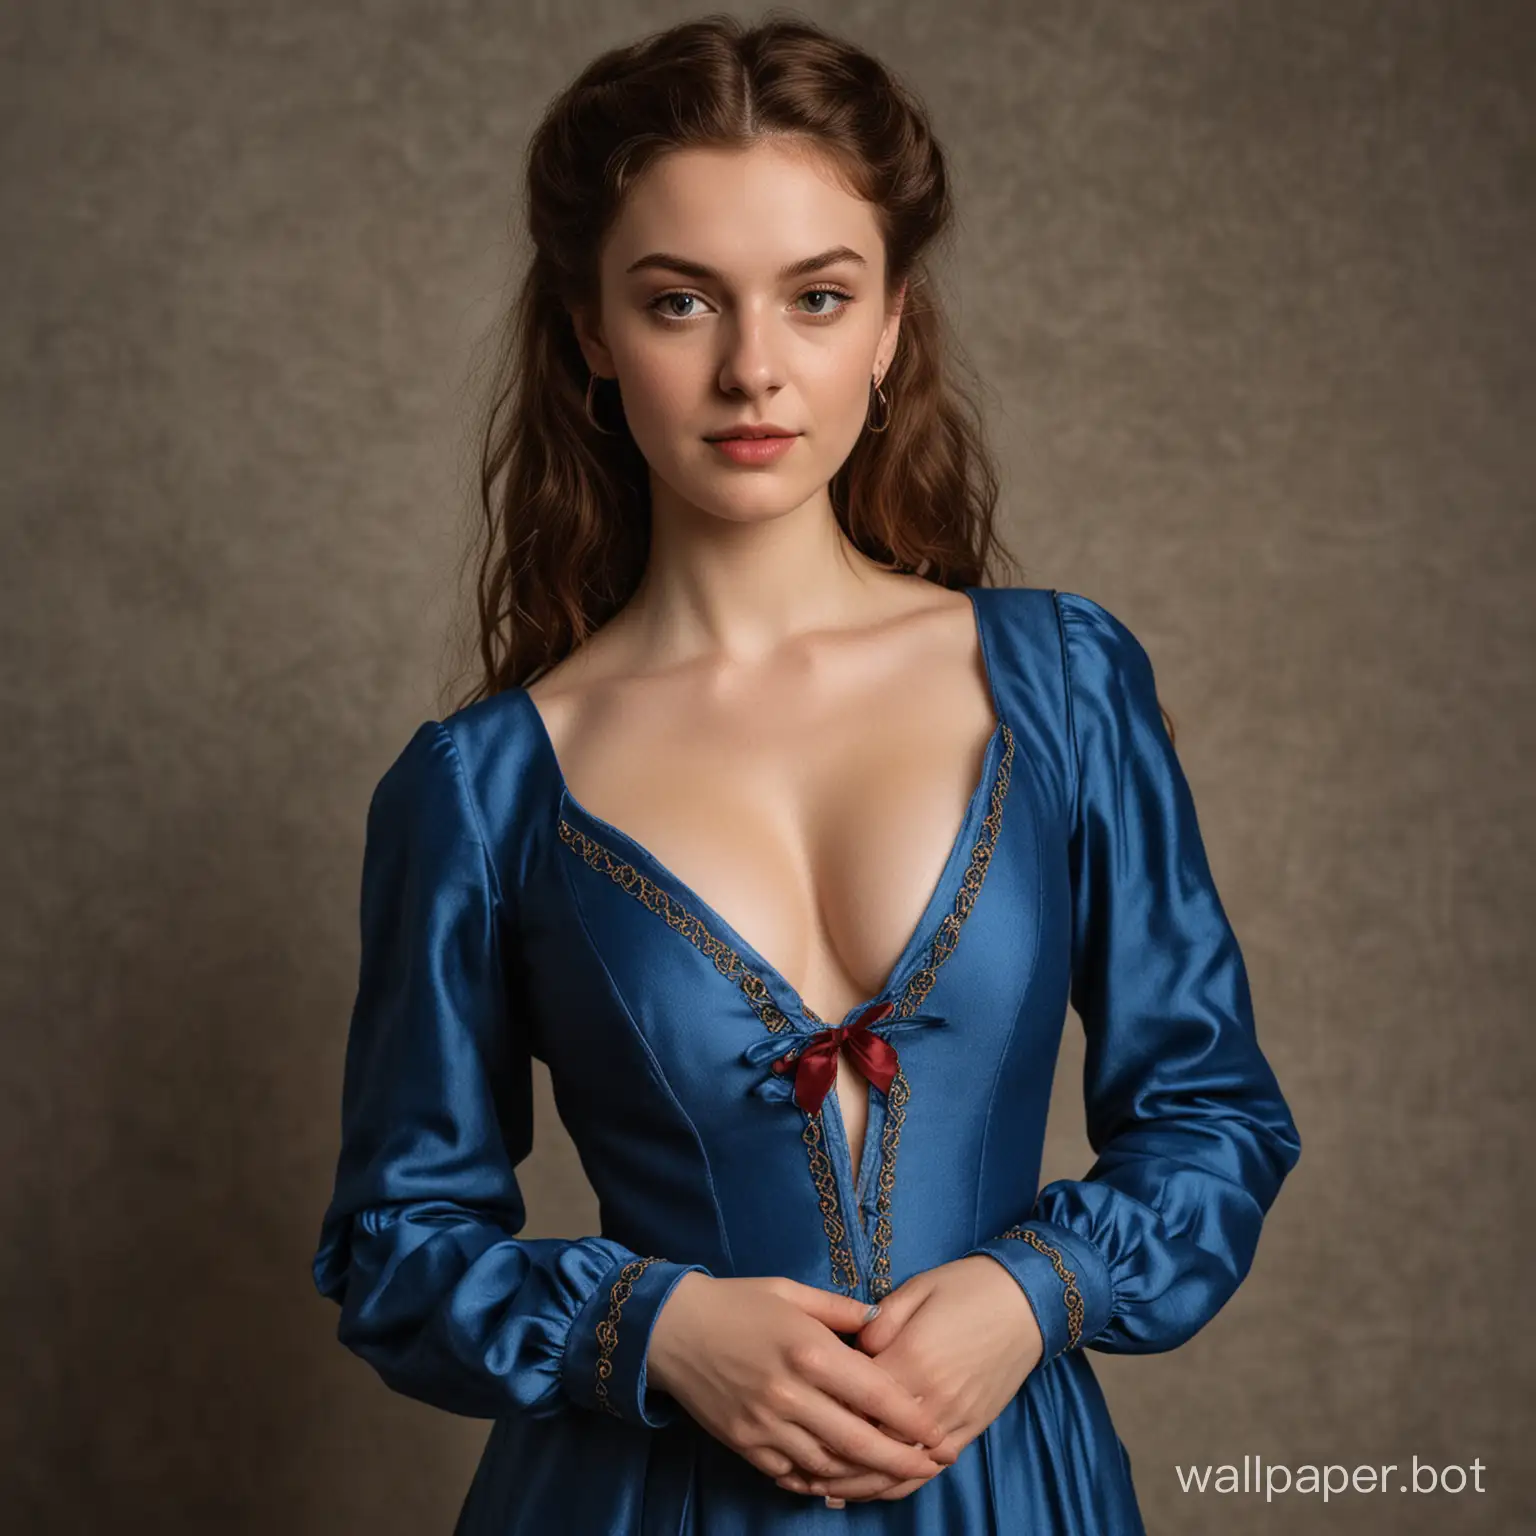 Renaissance-Girl-in-Blue-Felt-Dress-with-Deep-V-Neck